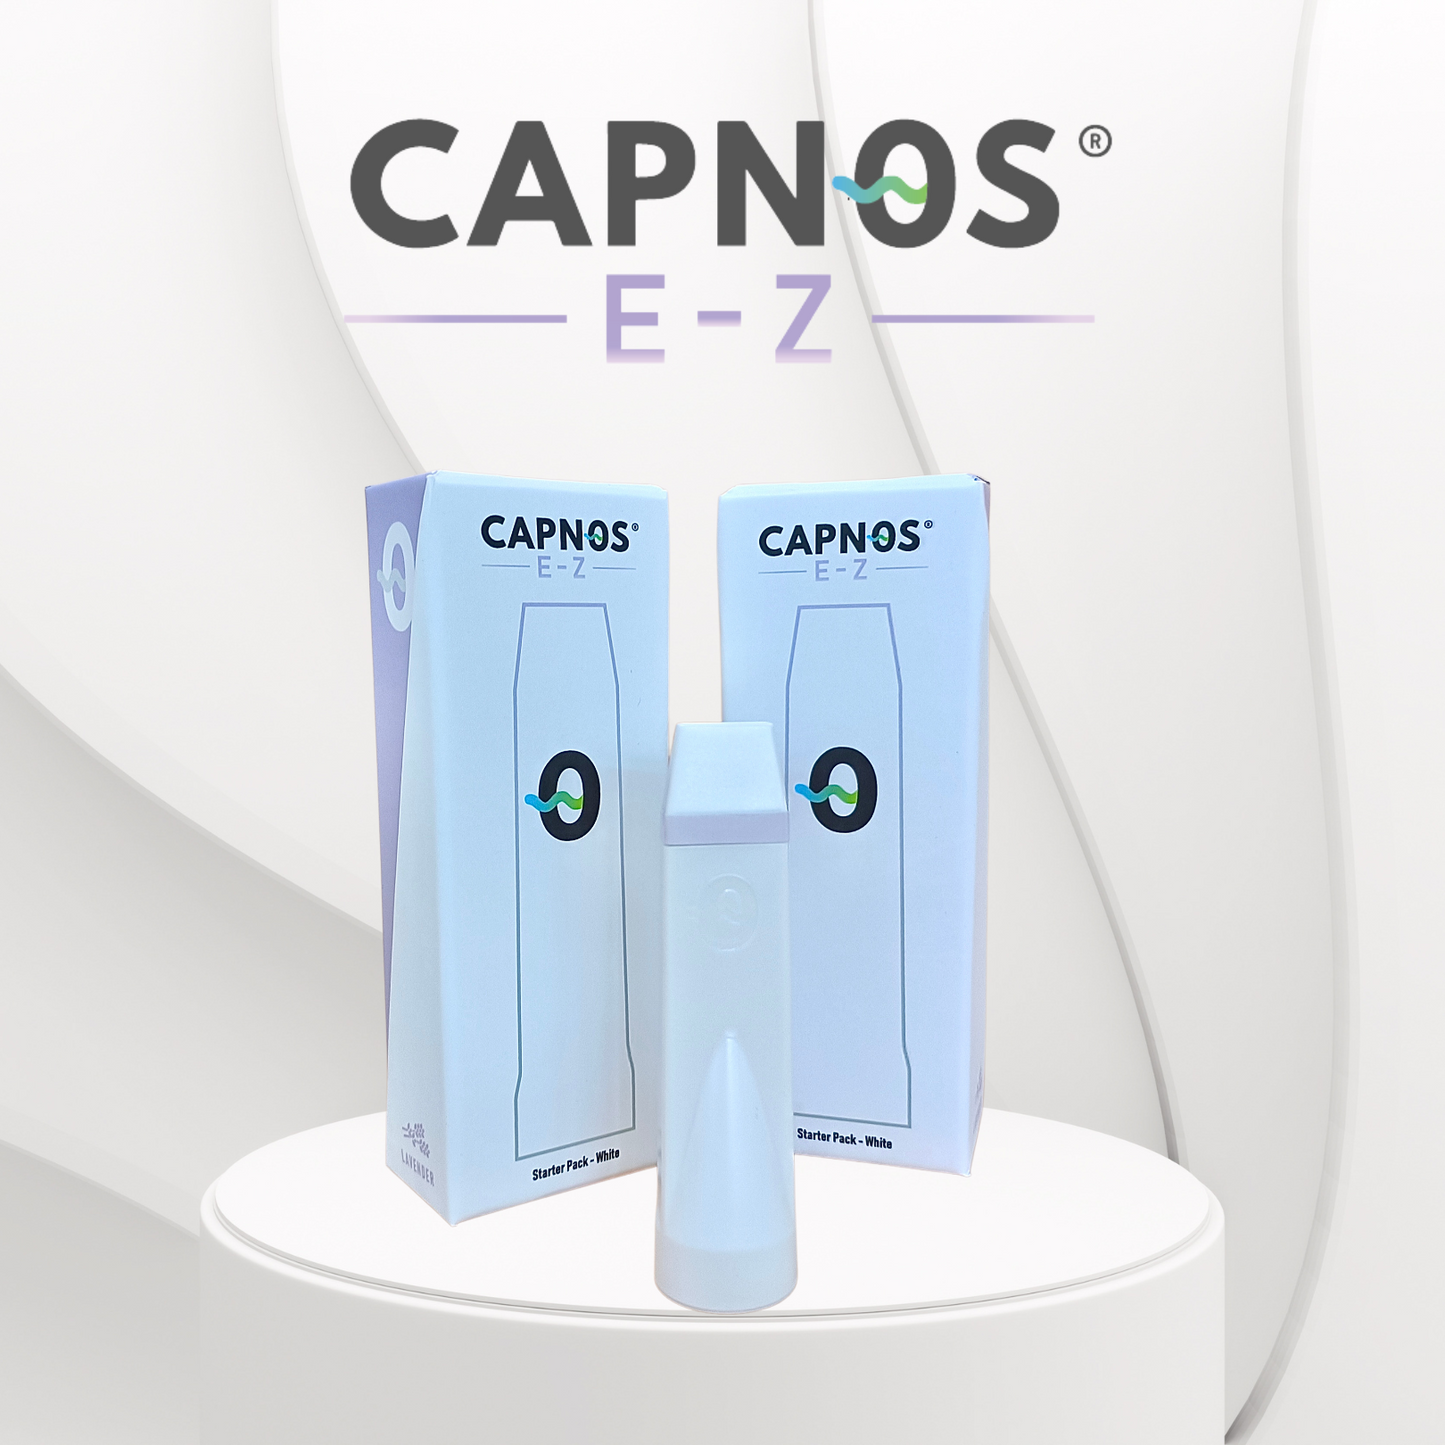 The CAPNOS® E-Z